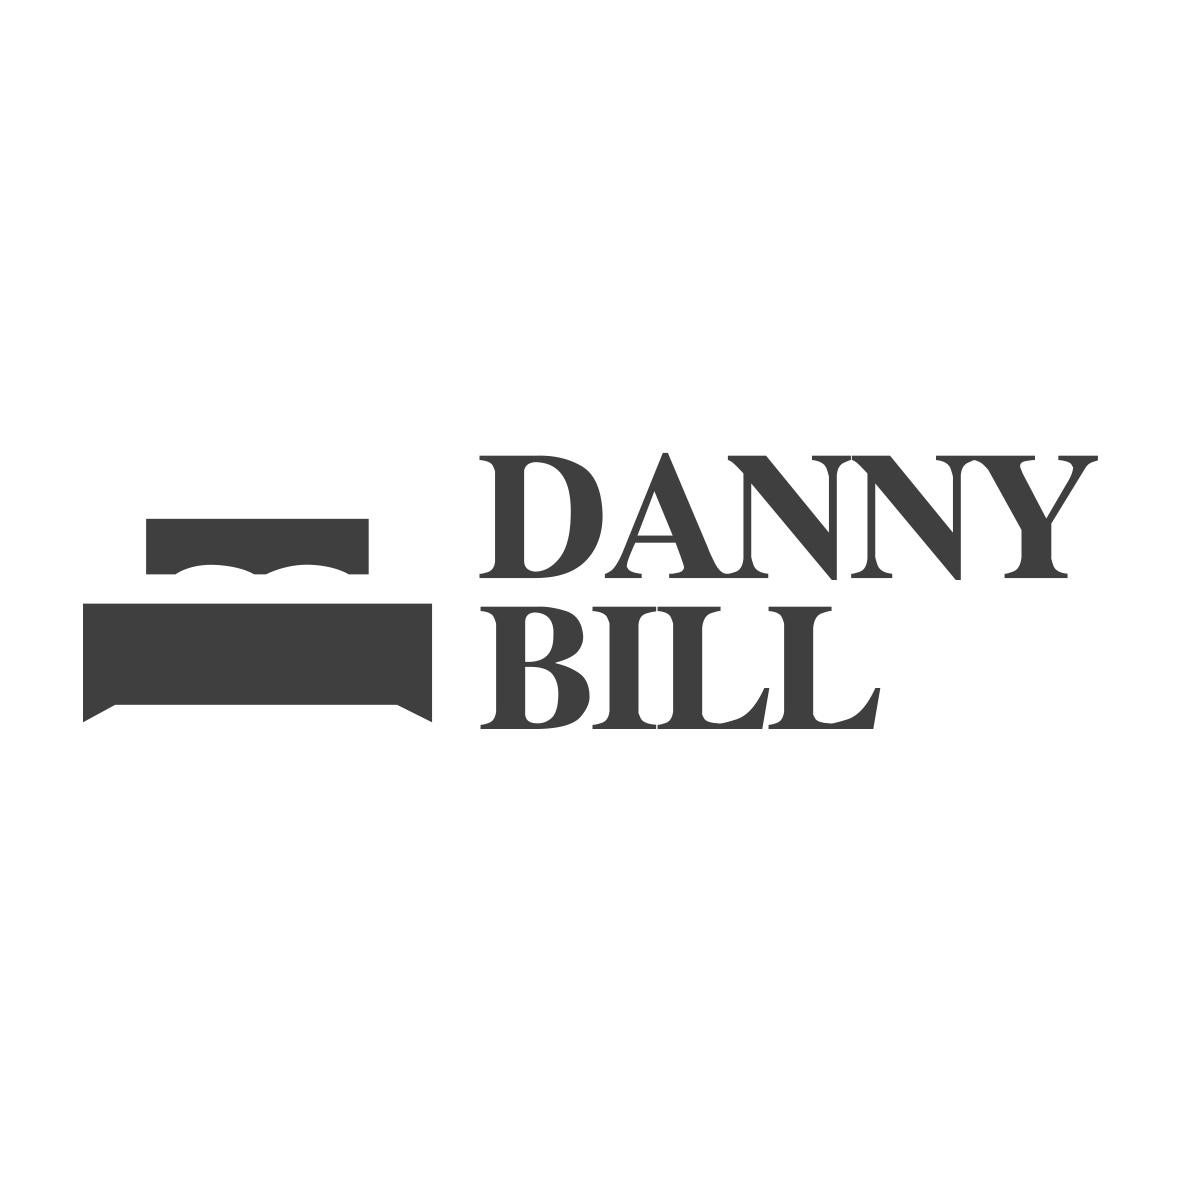 DANNY BILL